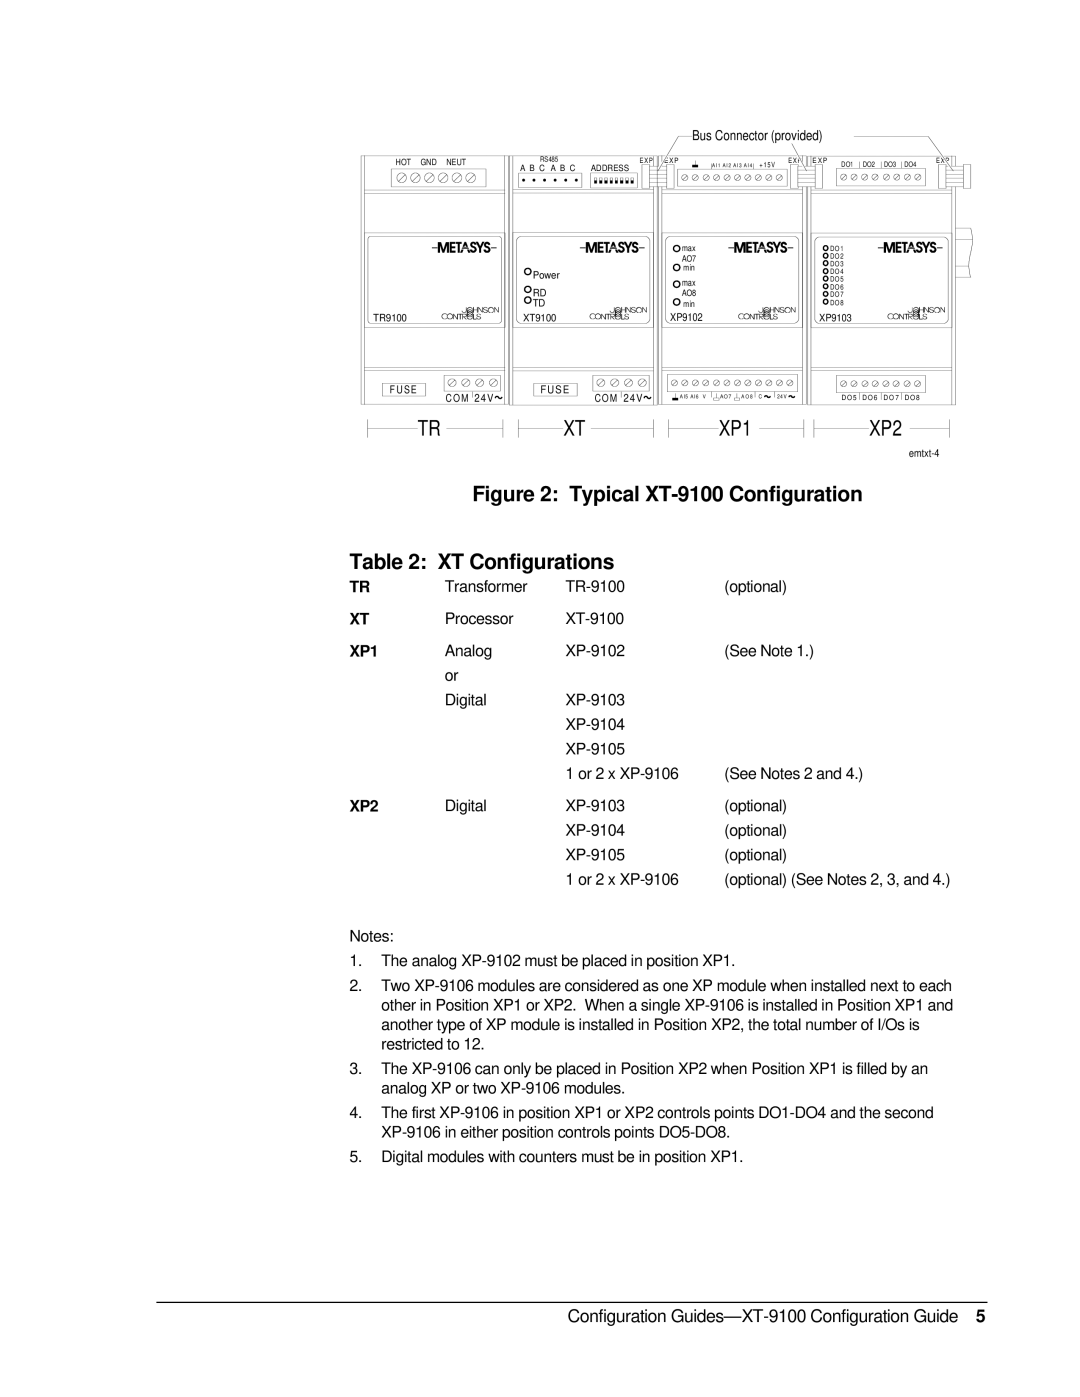 Johnson Controls Typical XT-9100 Configuration XT Configurations, Configuration Guides-XT-9100 Configuration Guide 